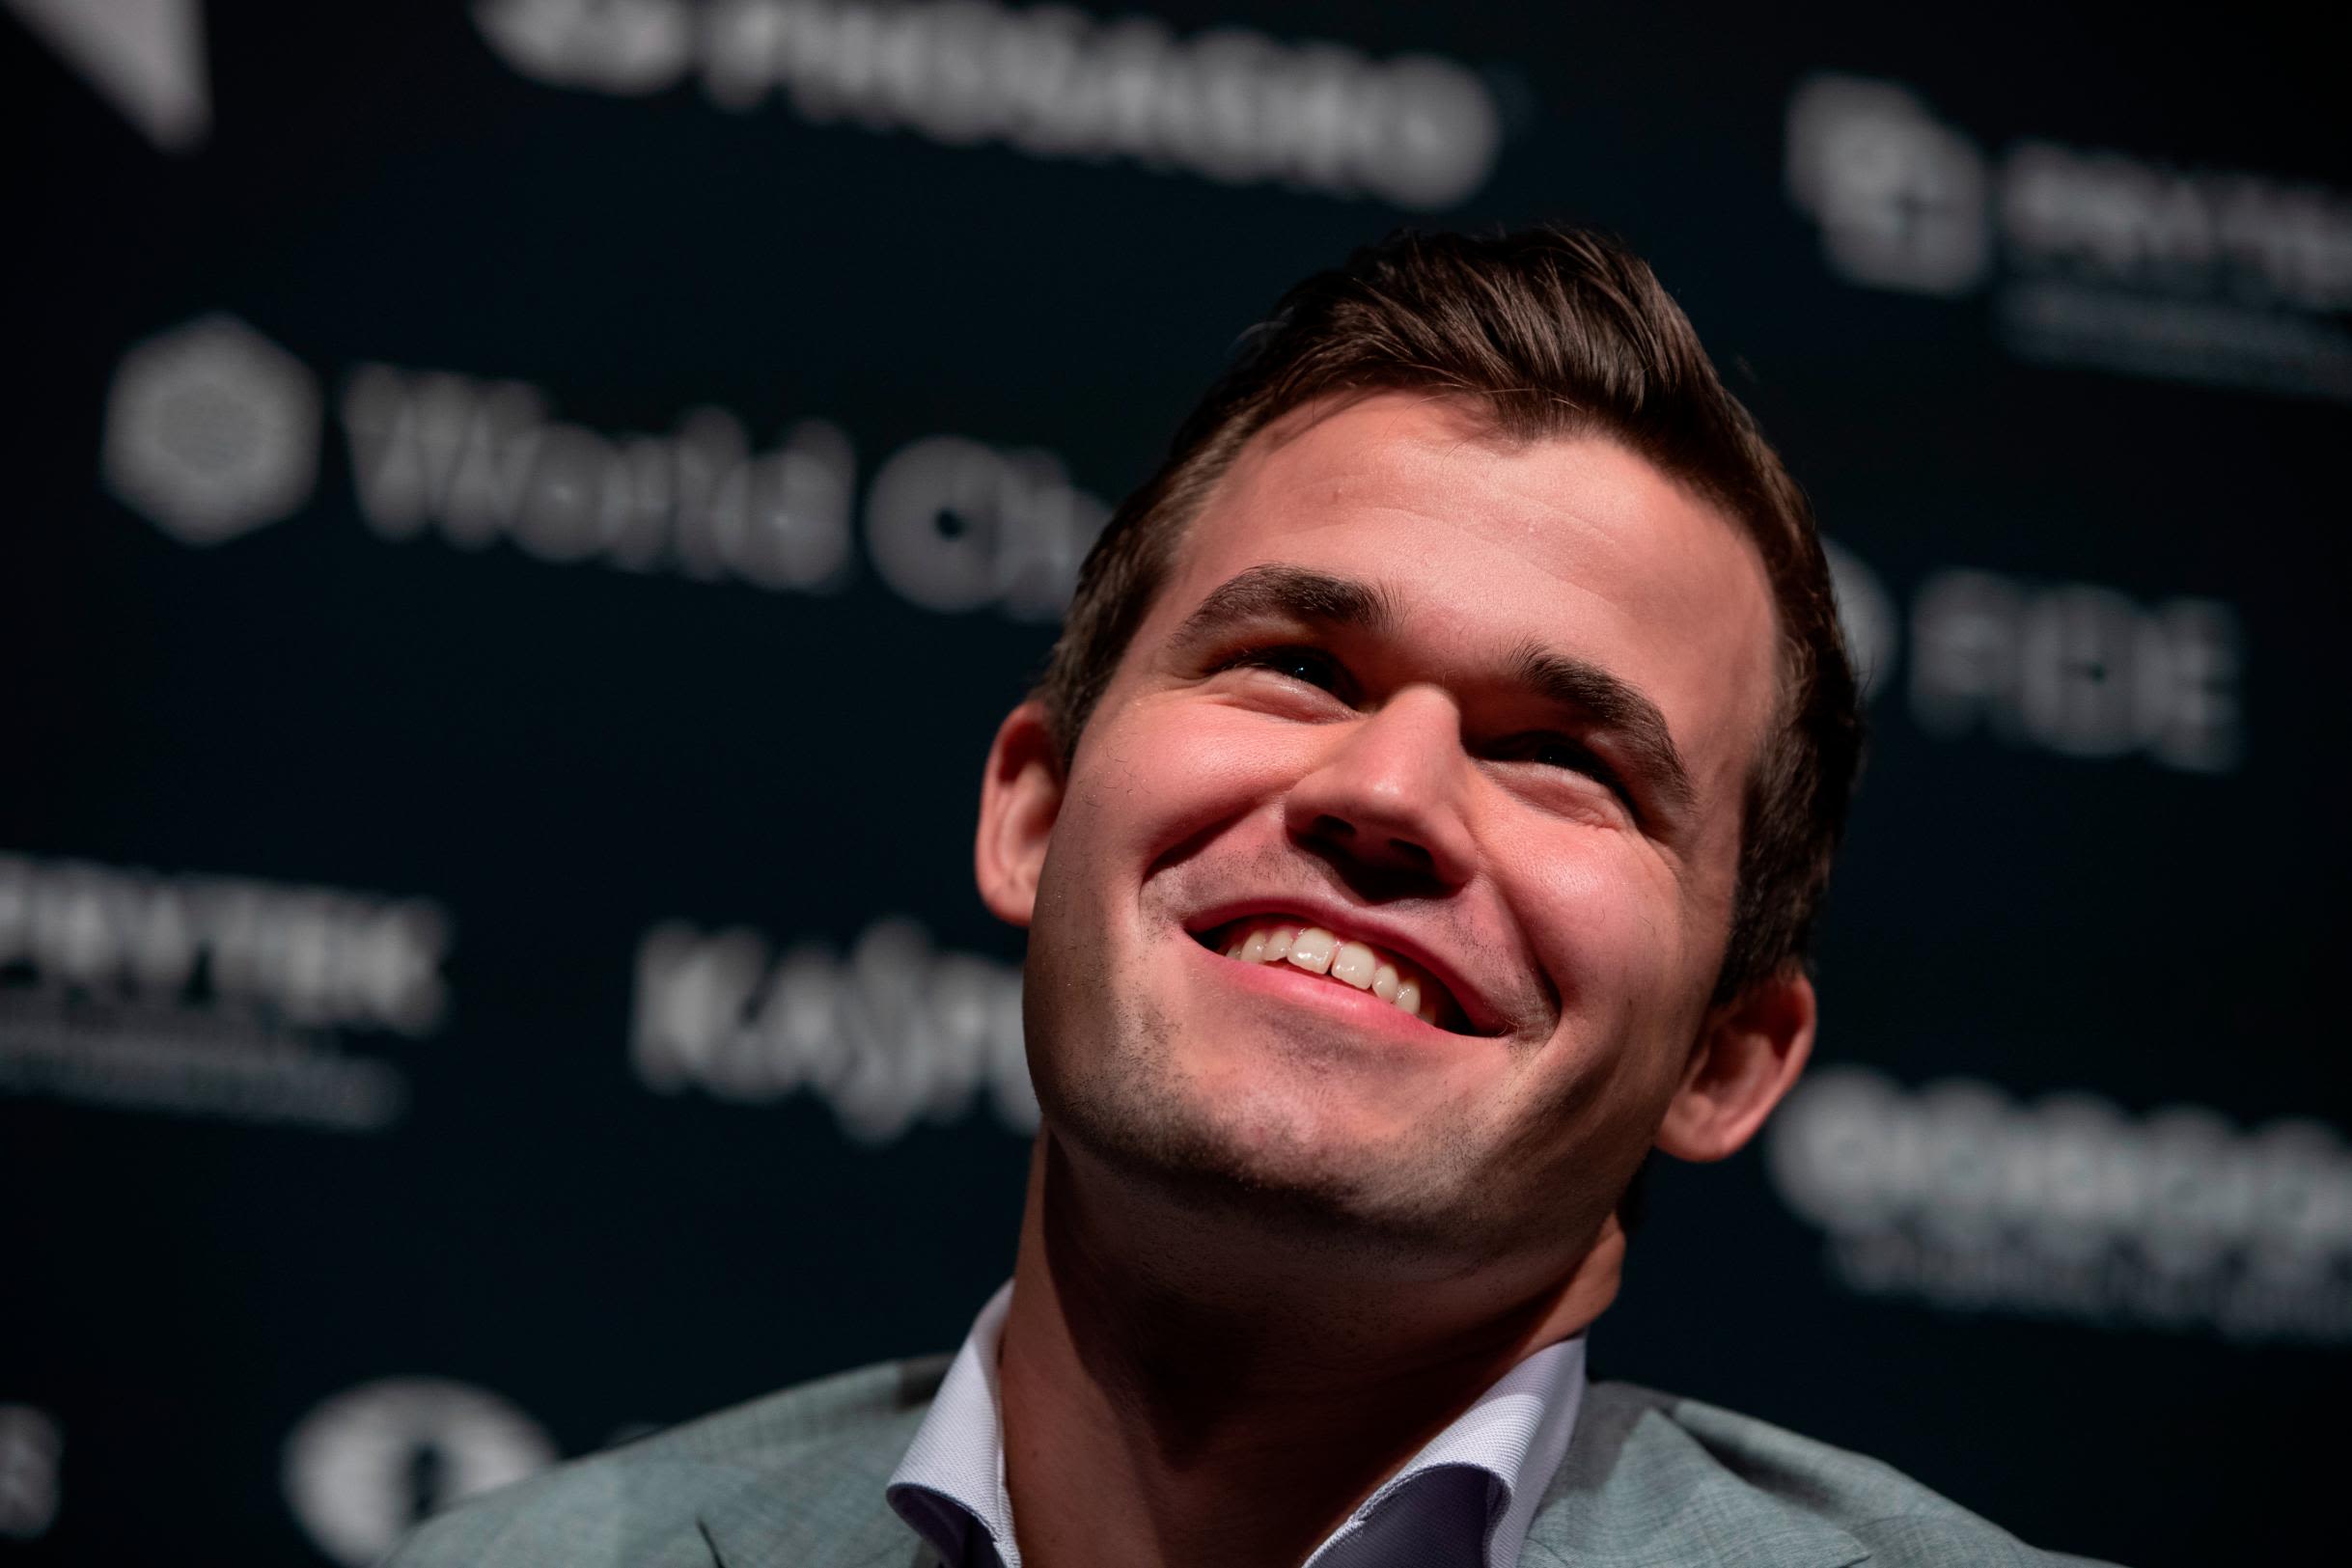 Magnus Carlsen Wins Stellar Online Event Organised by Him